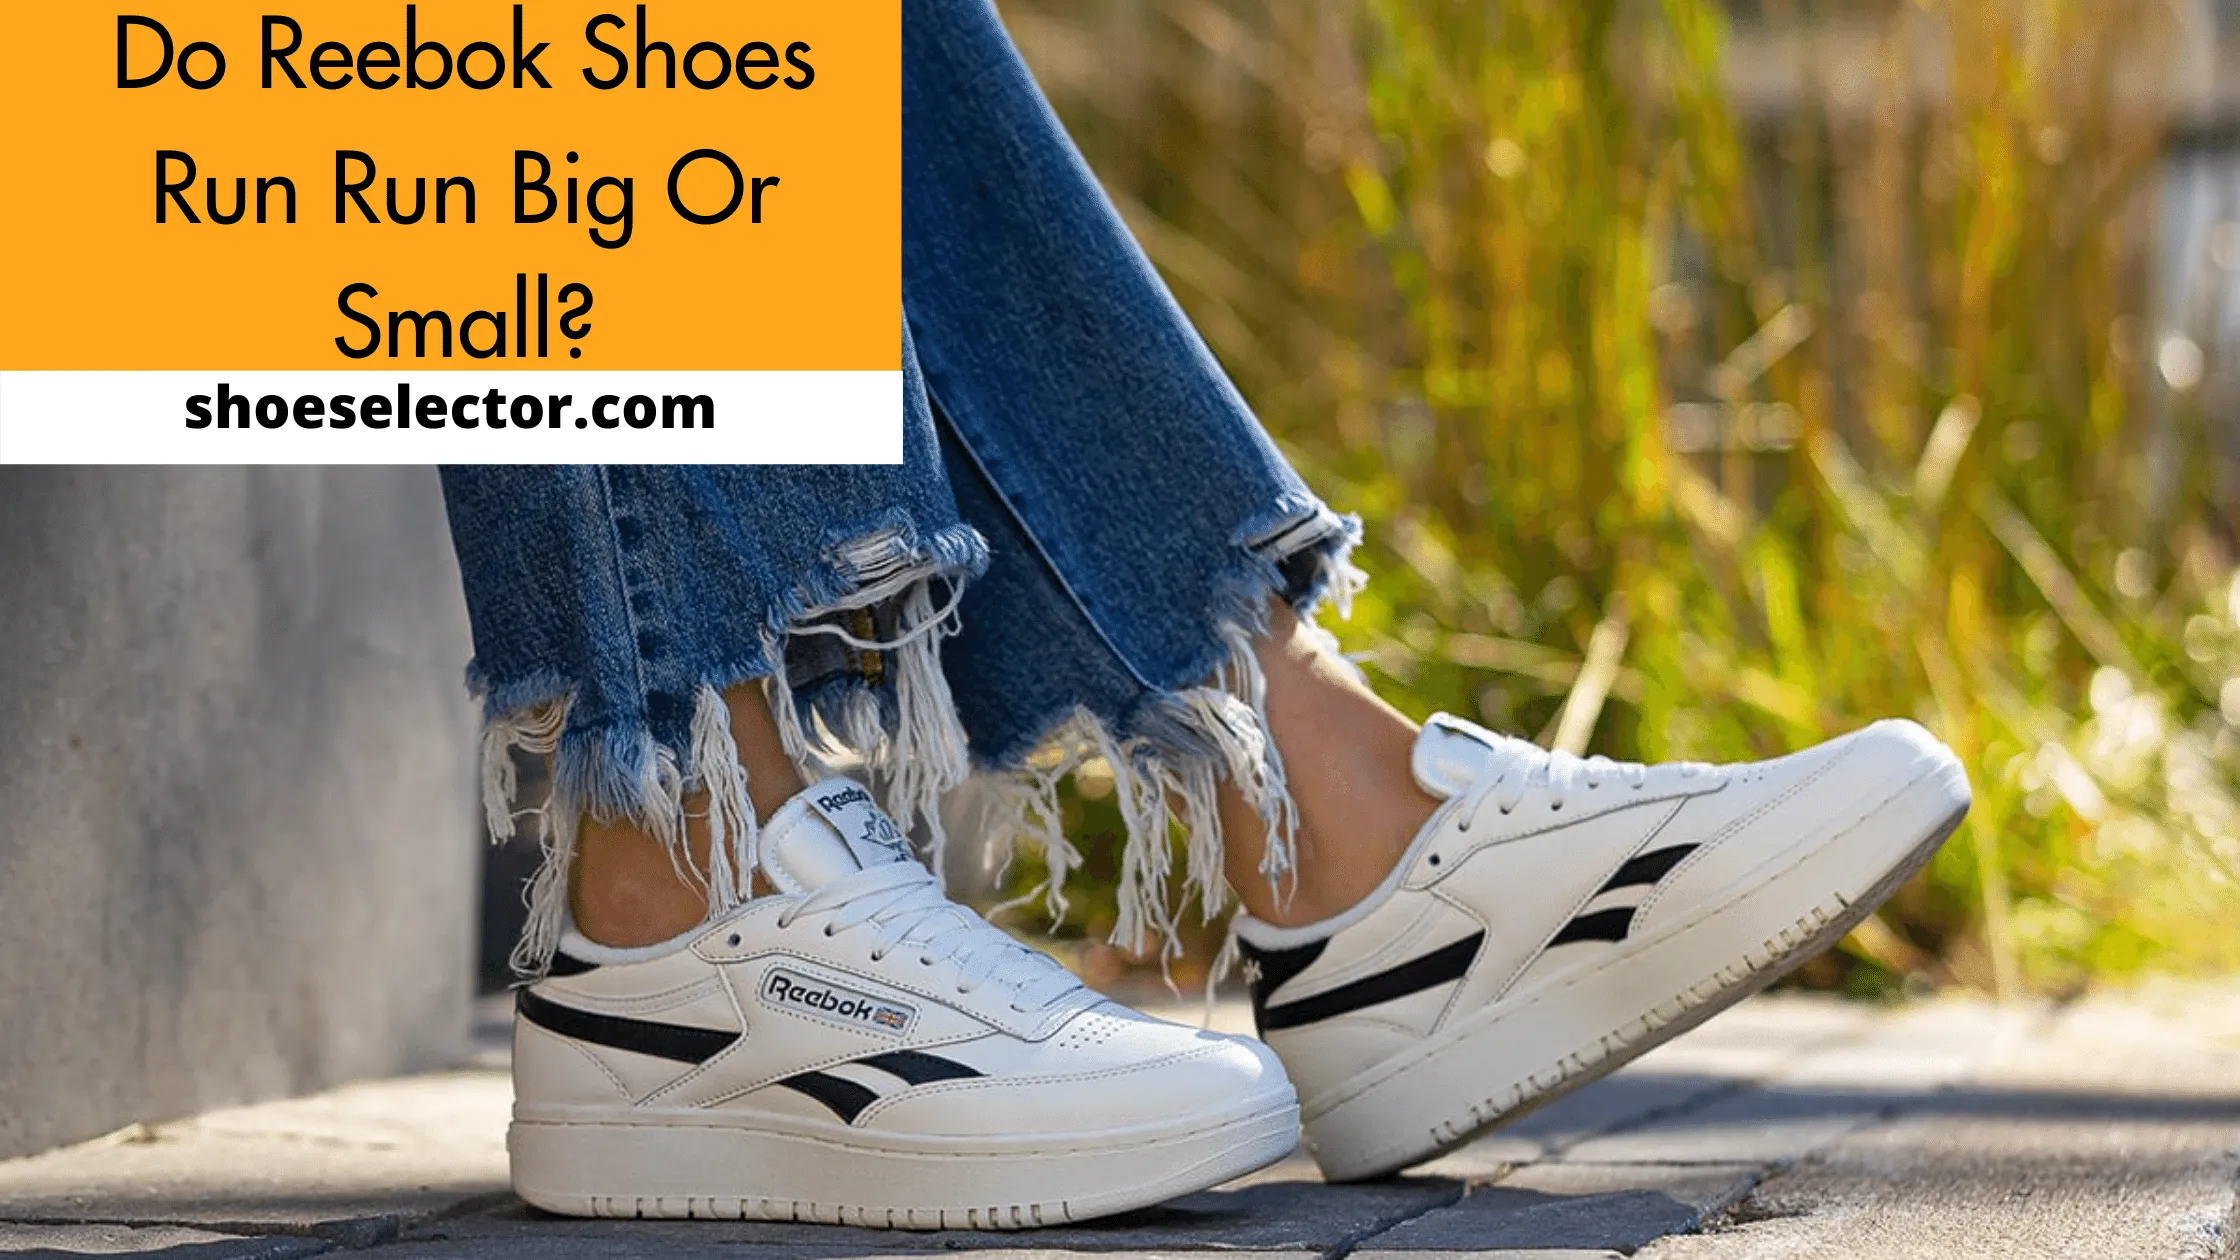 Do Reebok Shoes Run Big or Small? - Pro Guide